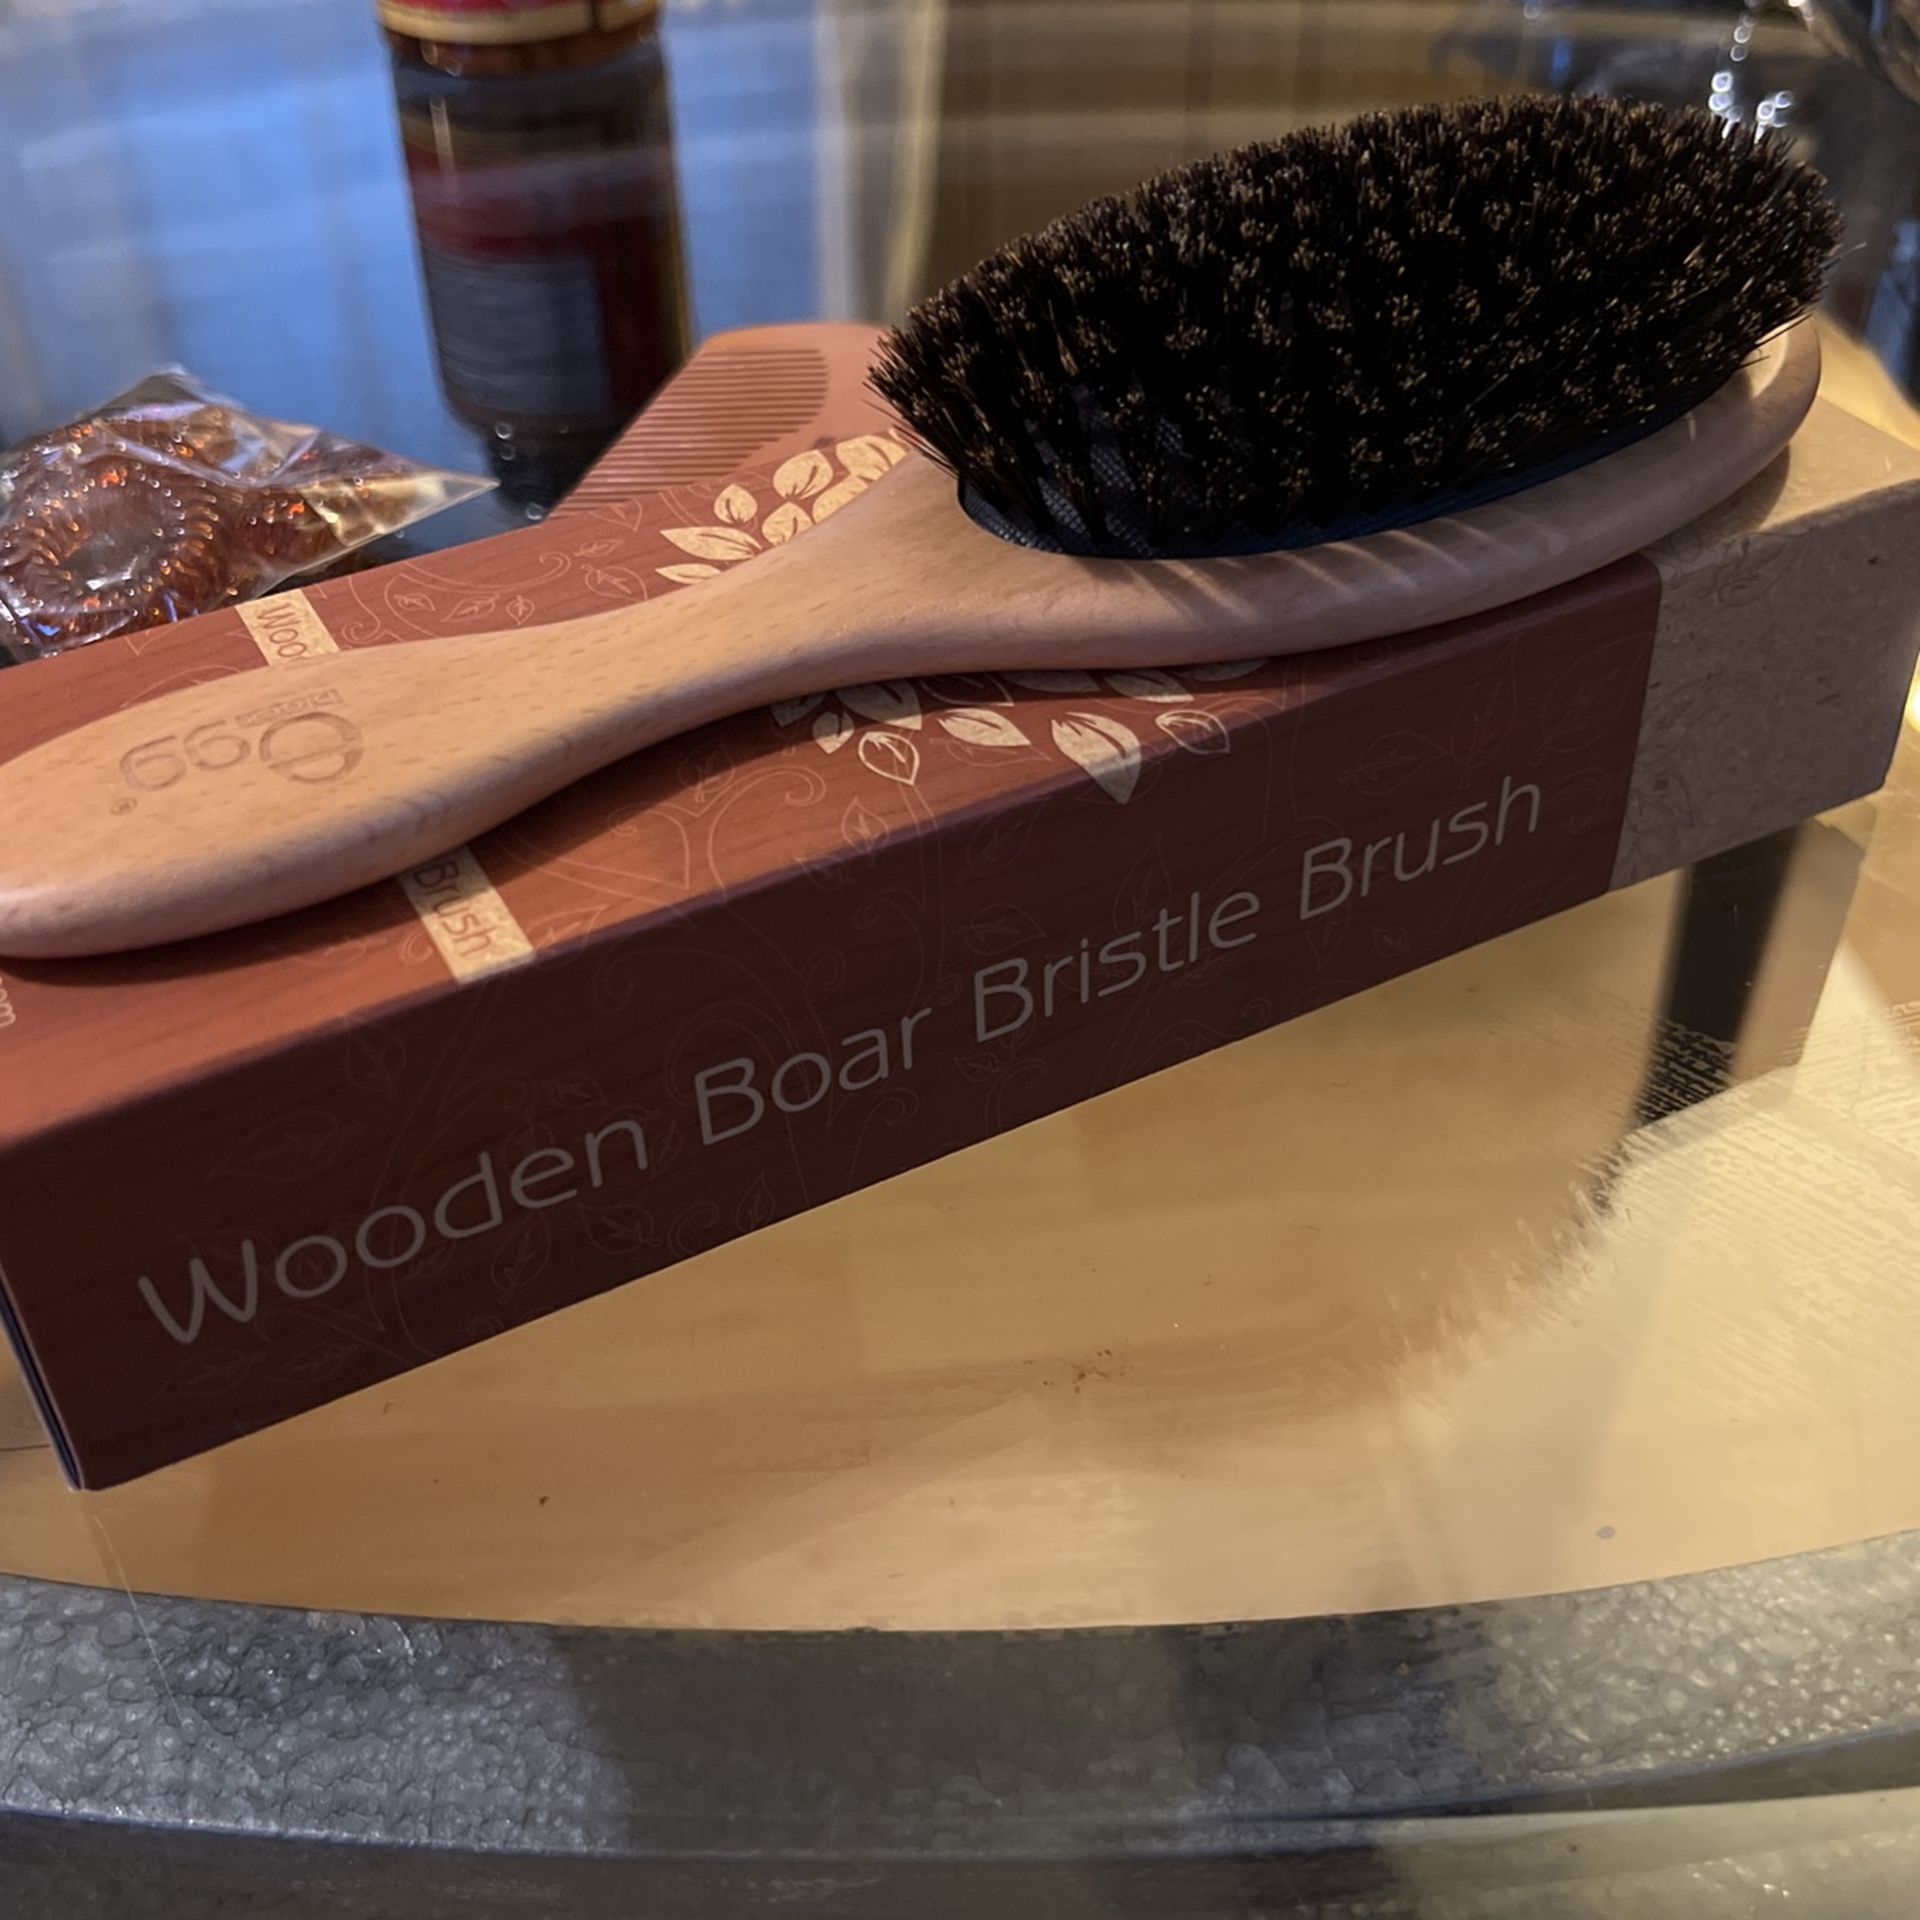 Wooden Boar Bristle Brush